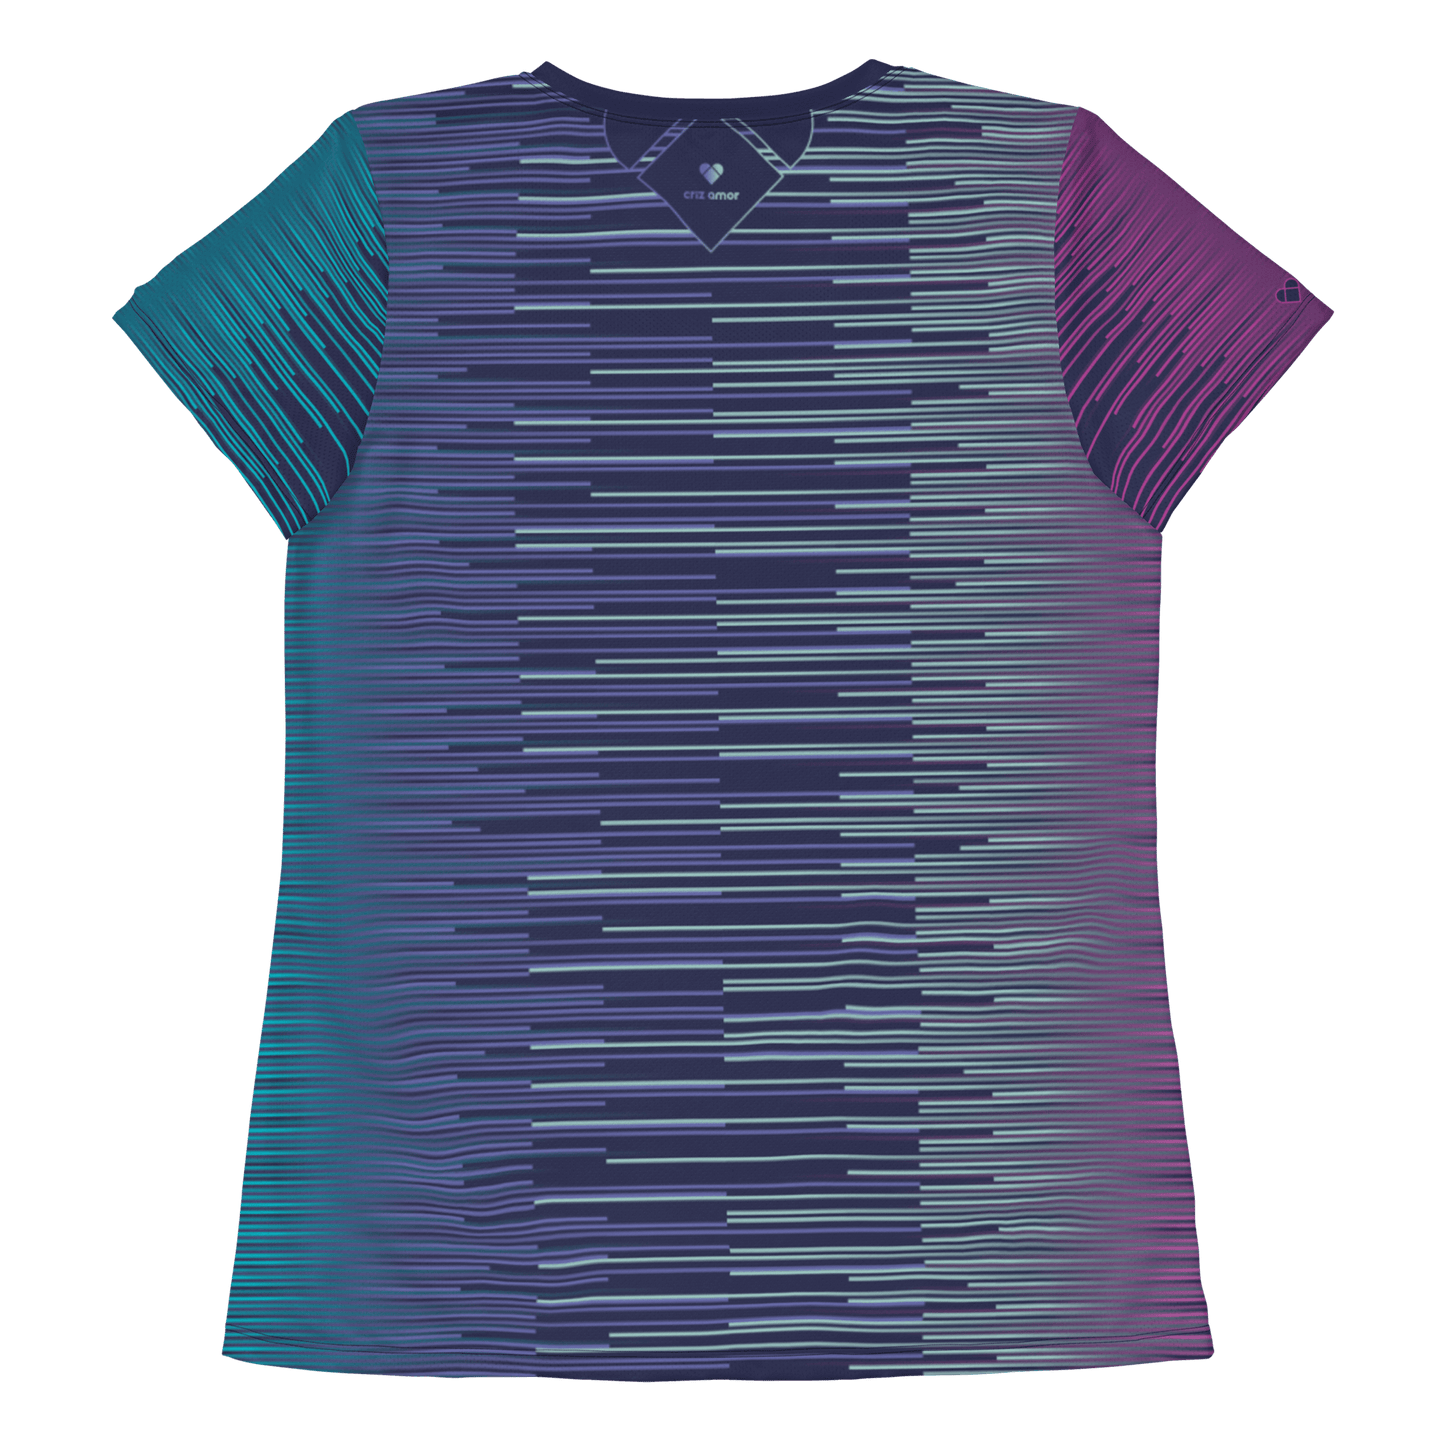 Dark Slate Blue Sport Shirt with Gradient Lines,  Sportswear Design by CRiZ AMOR for Women